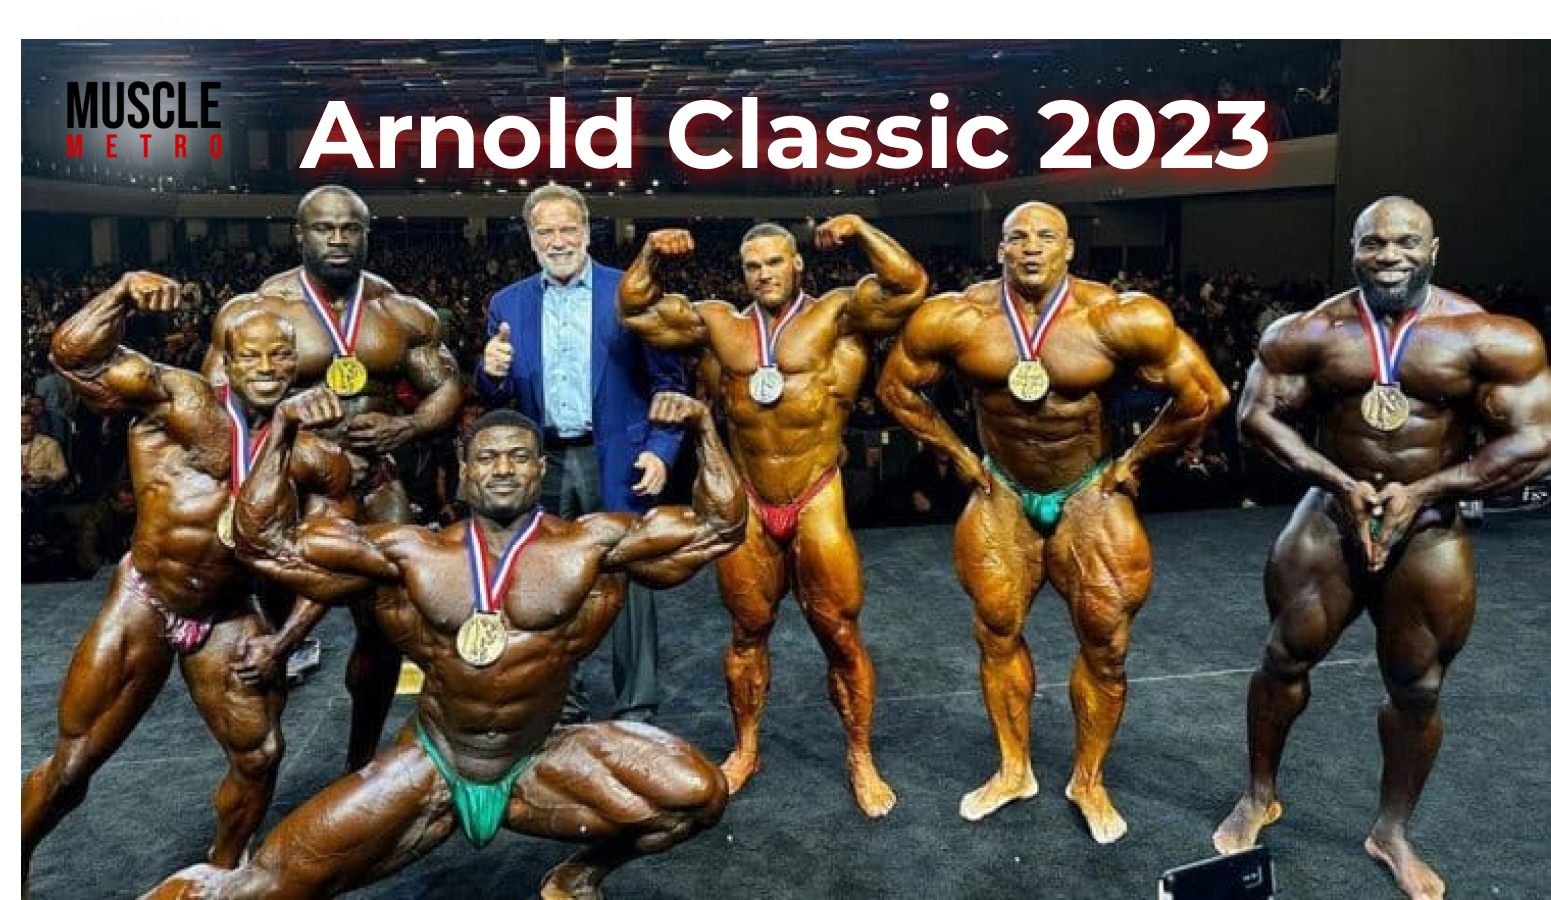 Arnold Classic Open Bodybuilding 2023